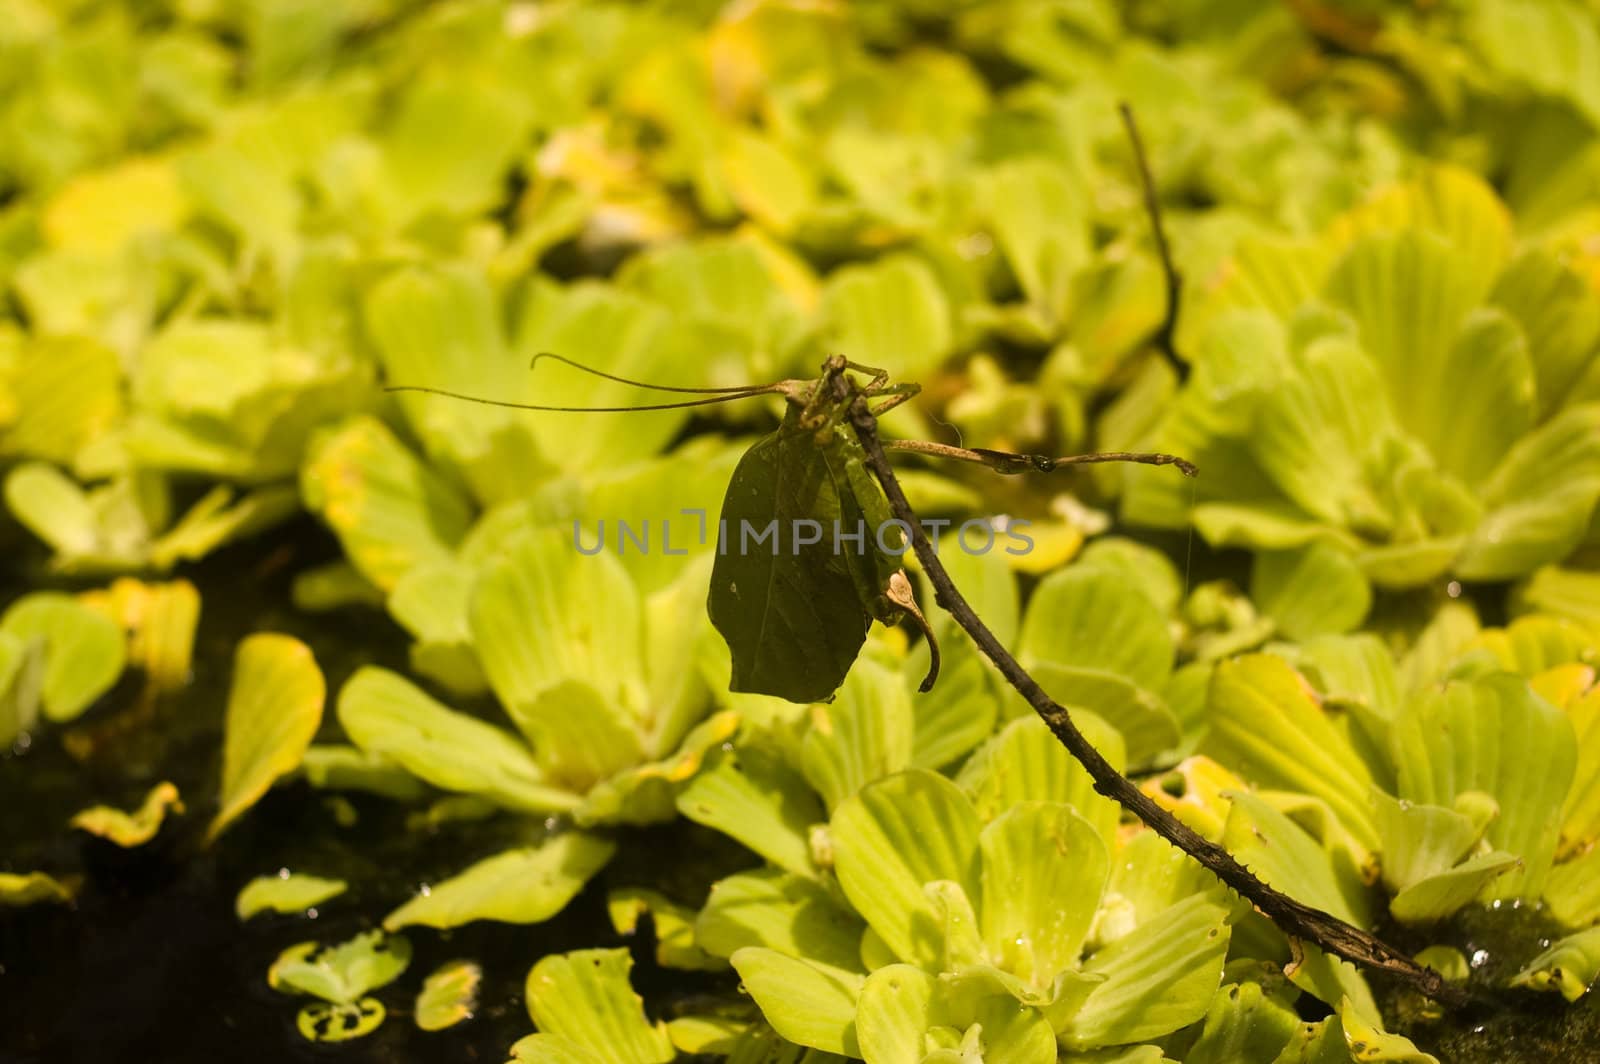 Leaf-mimicking katydid by edan